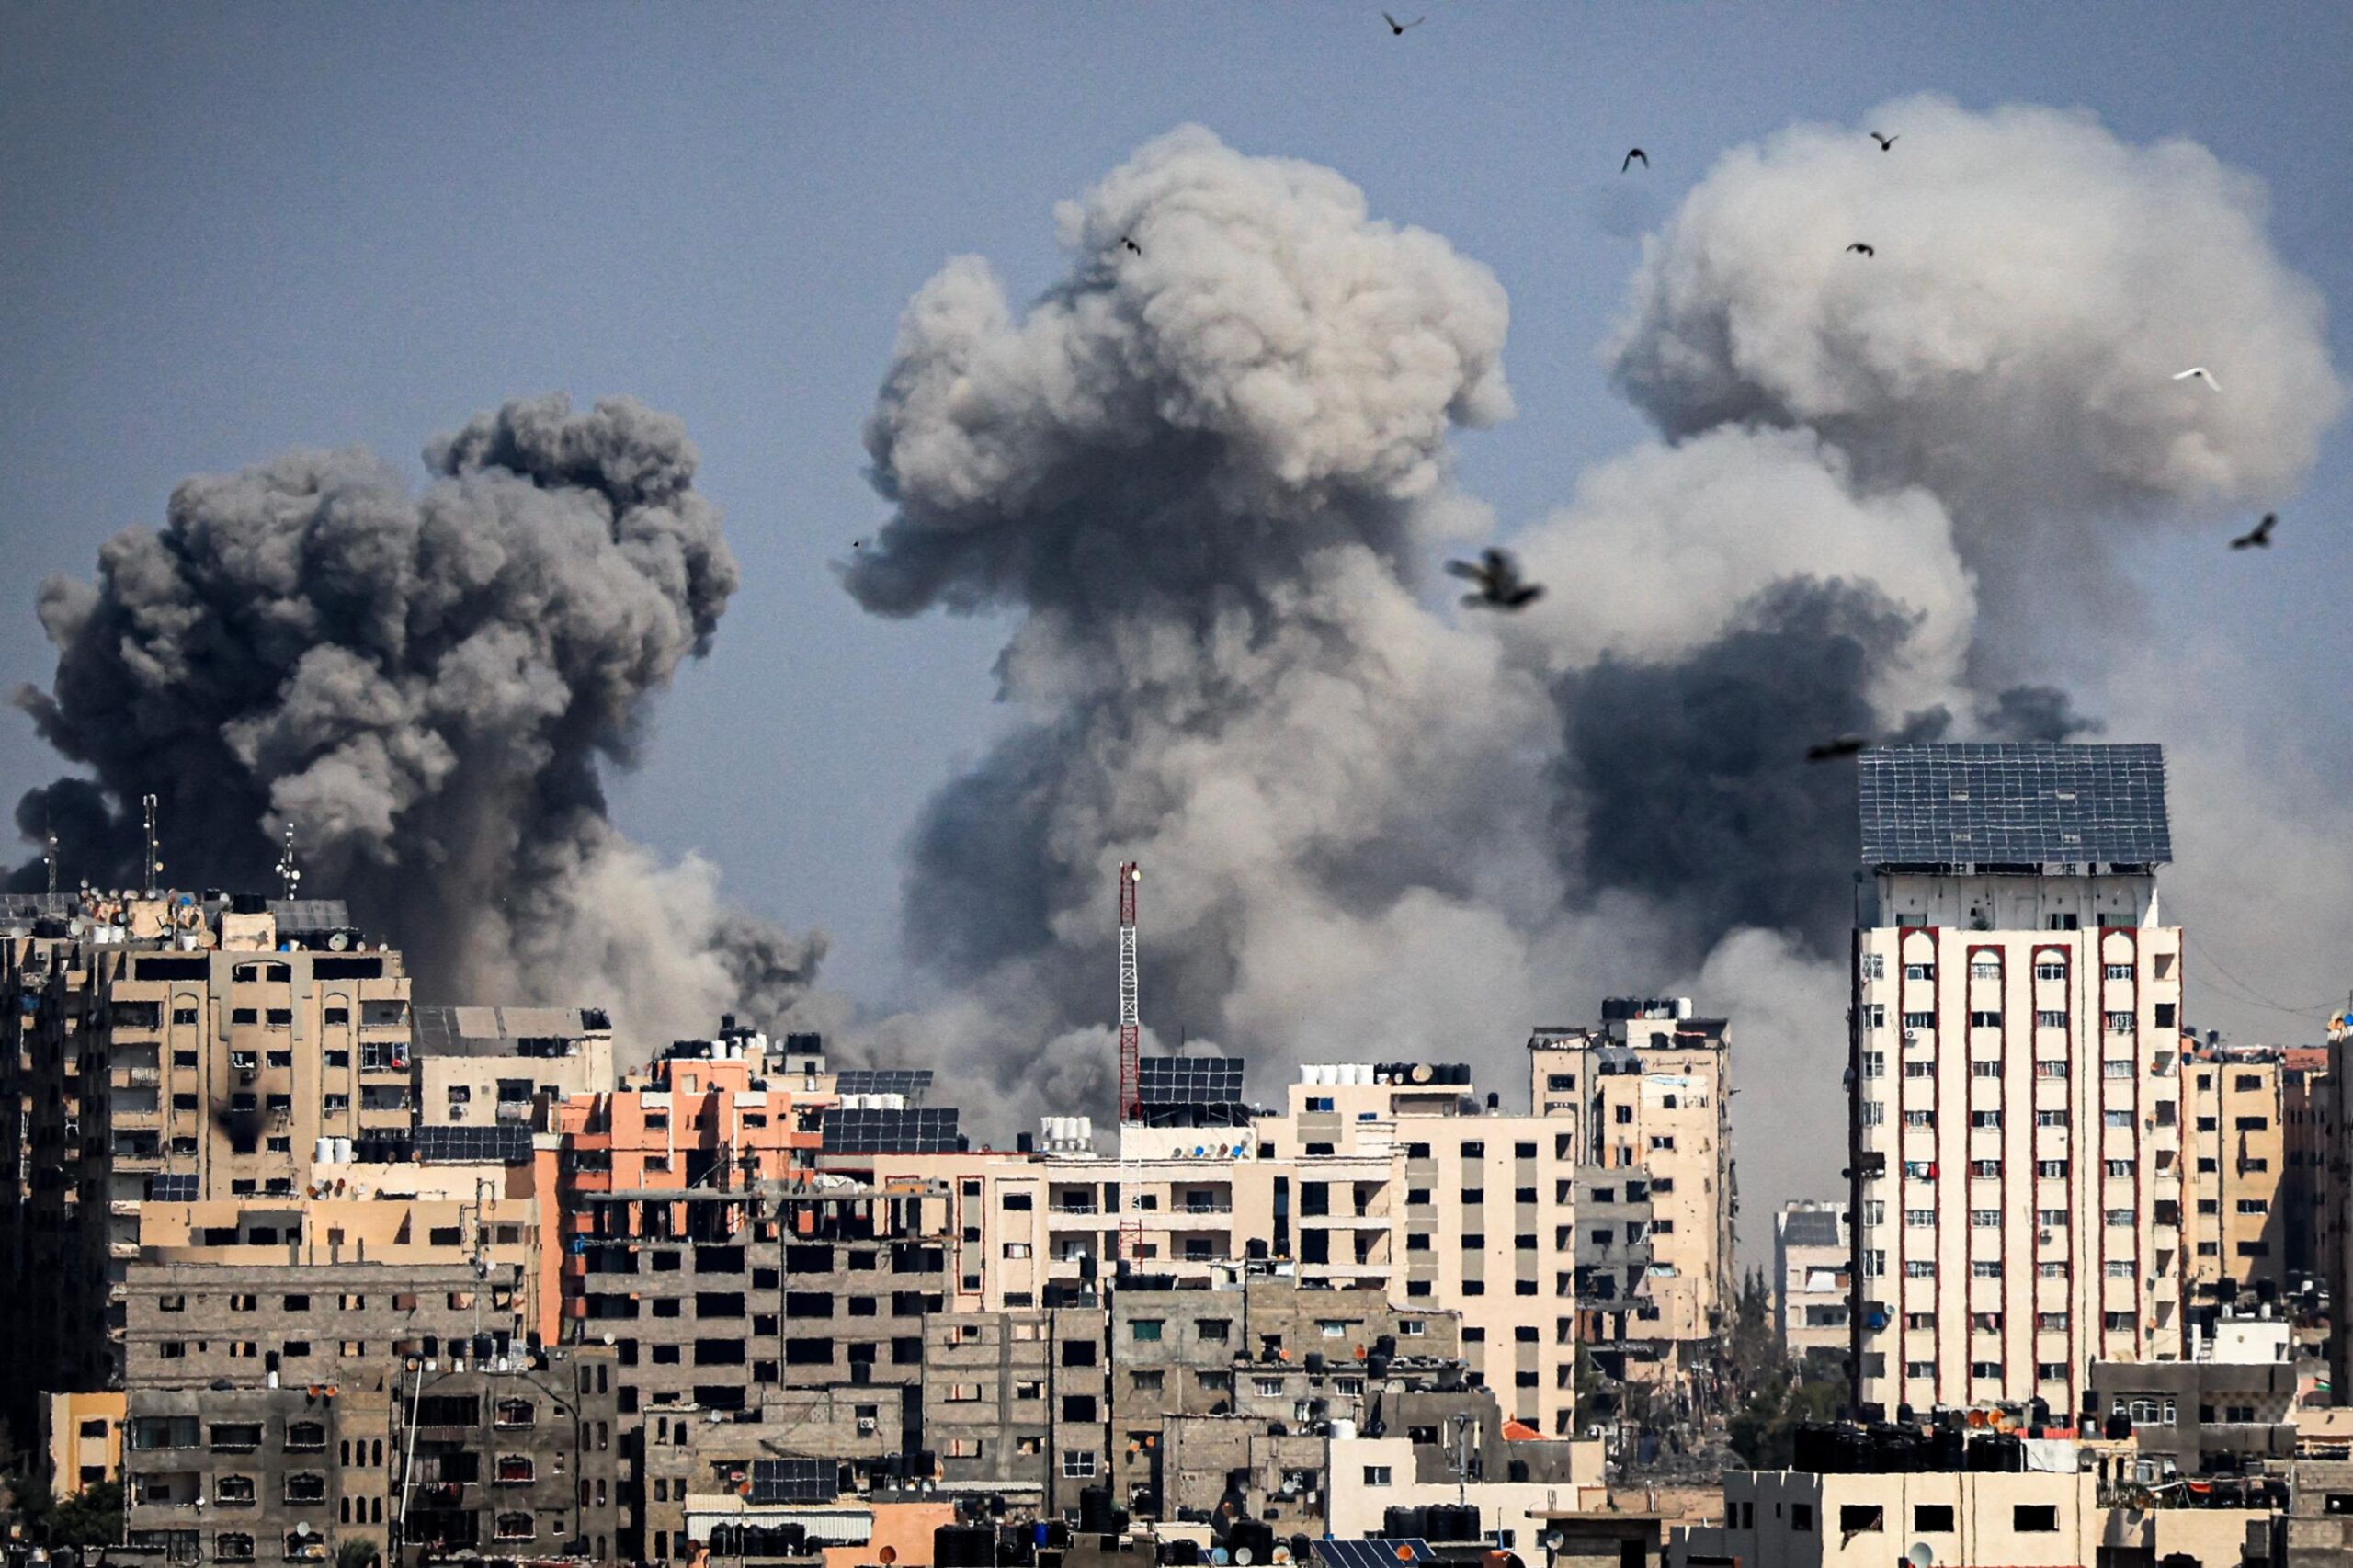 Devastation in Gaza as Israel wages war on Hamas - International News - News